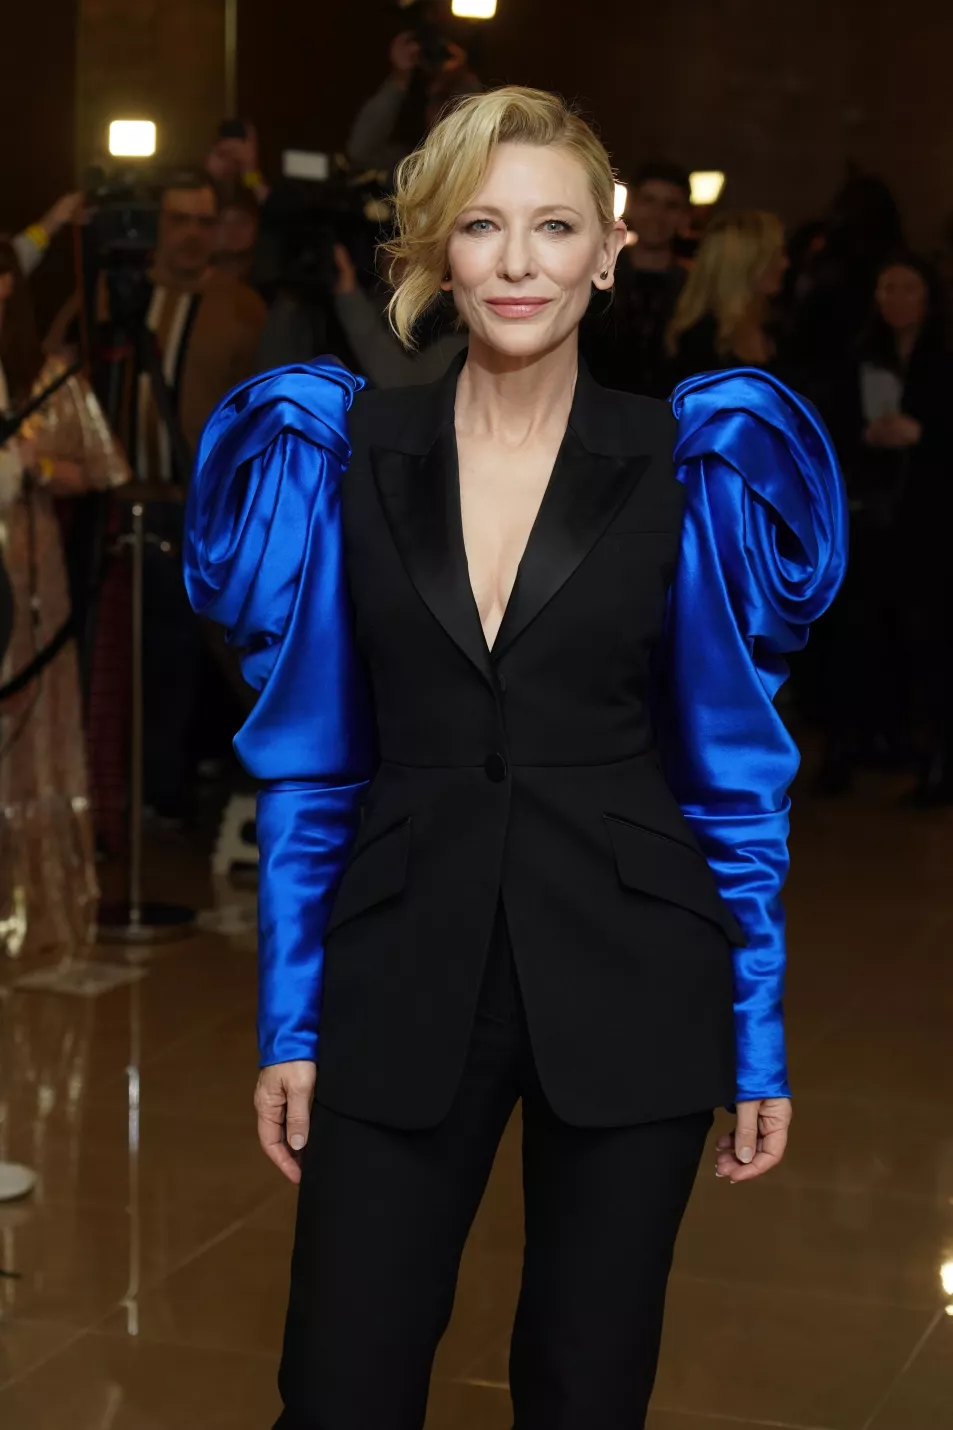 Cate Blanchett attending the 43rd London Critics' Circle Film Awards